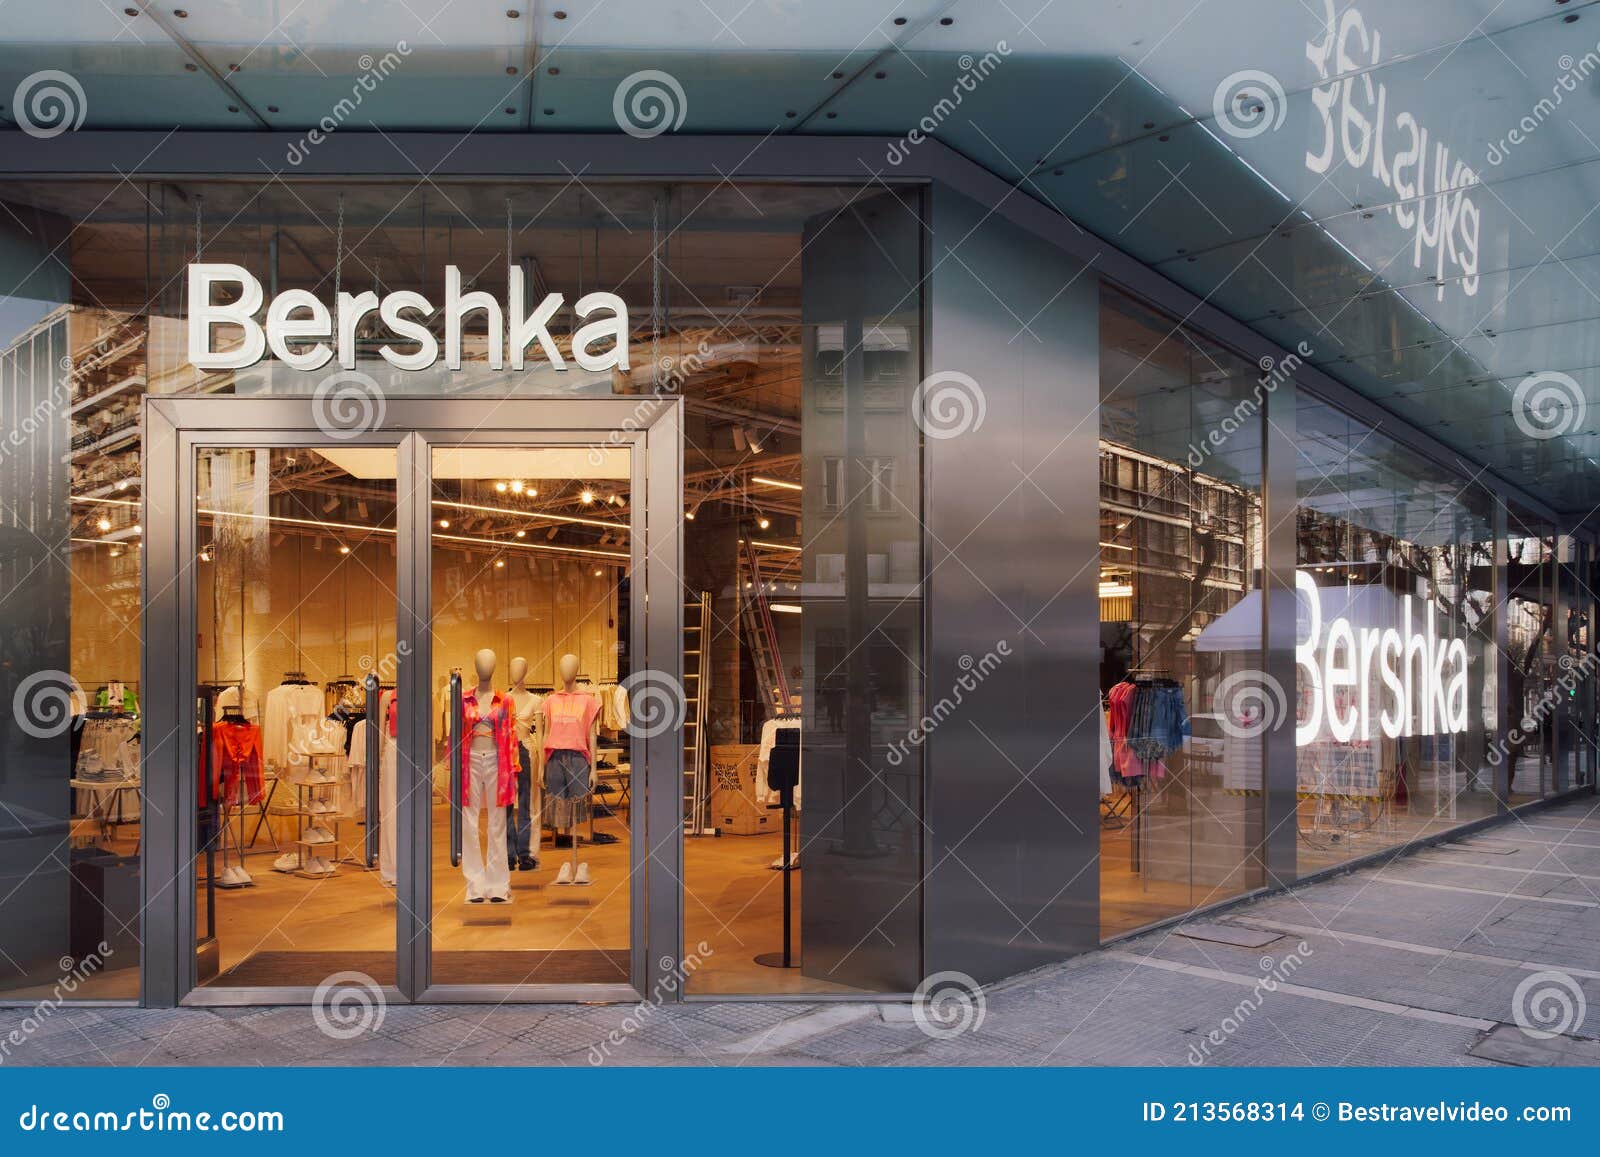 Bershka Retailer Store Exterior with Logo. Stock Image of 2021, branch: